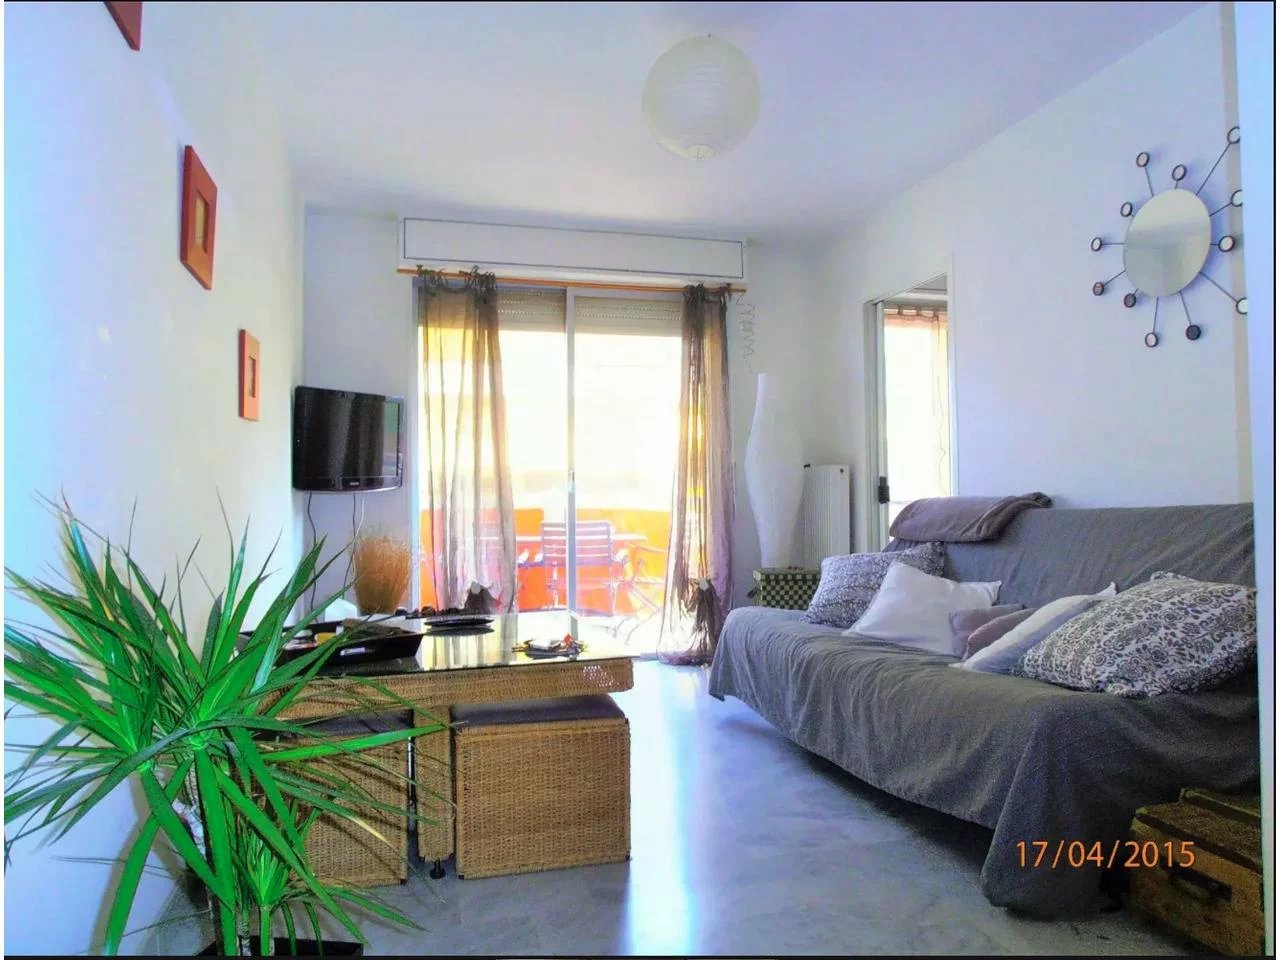 Appartement  1 Locali 31.27m2  In vendita   130 000 €